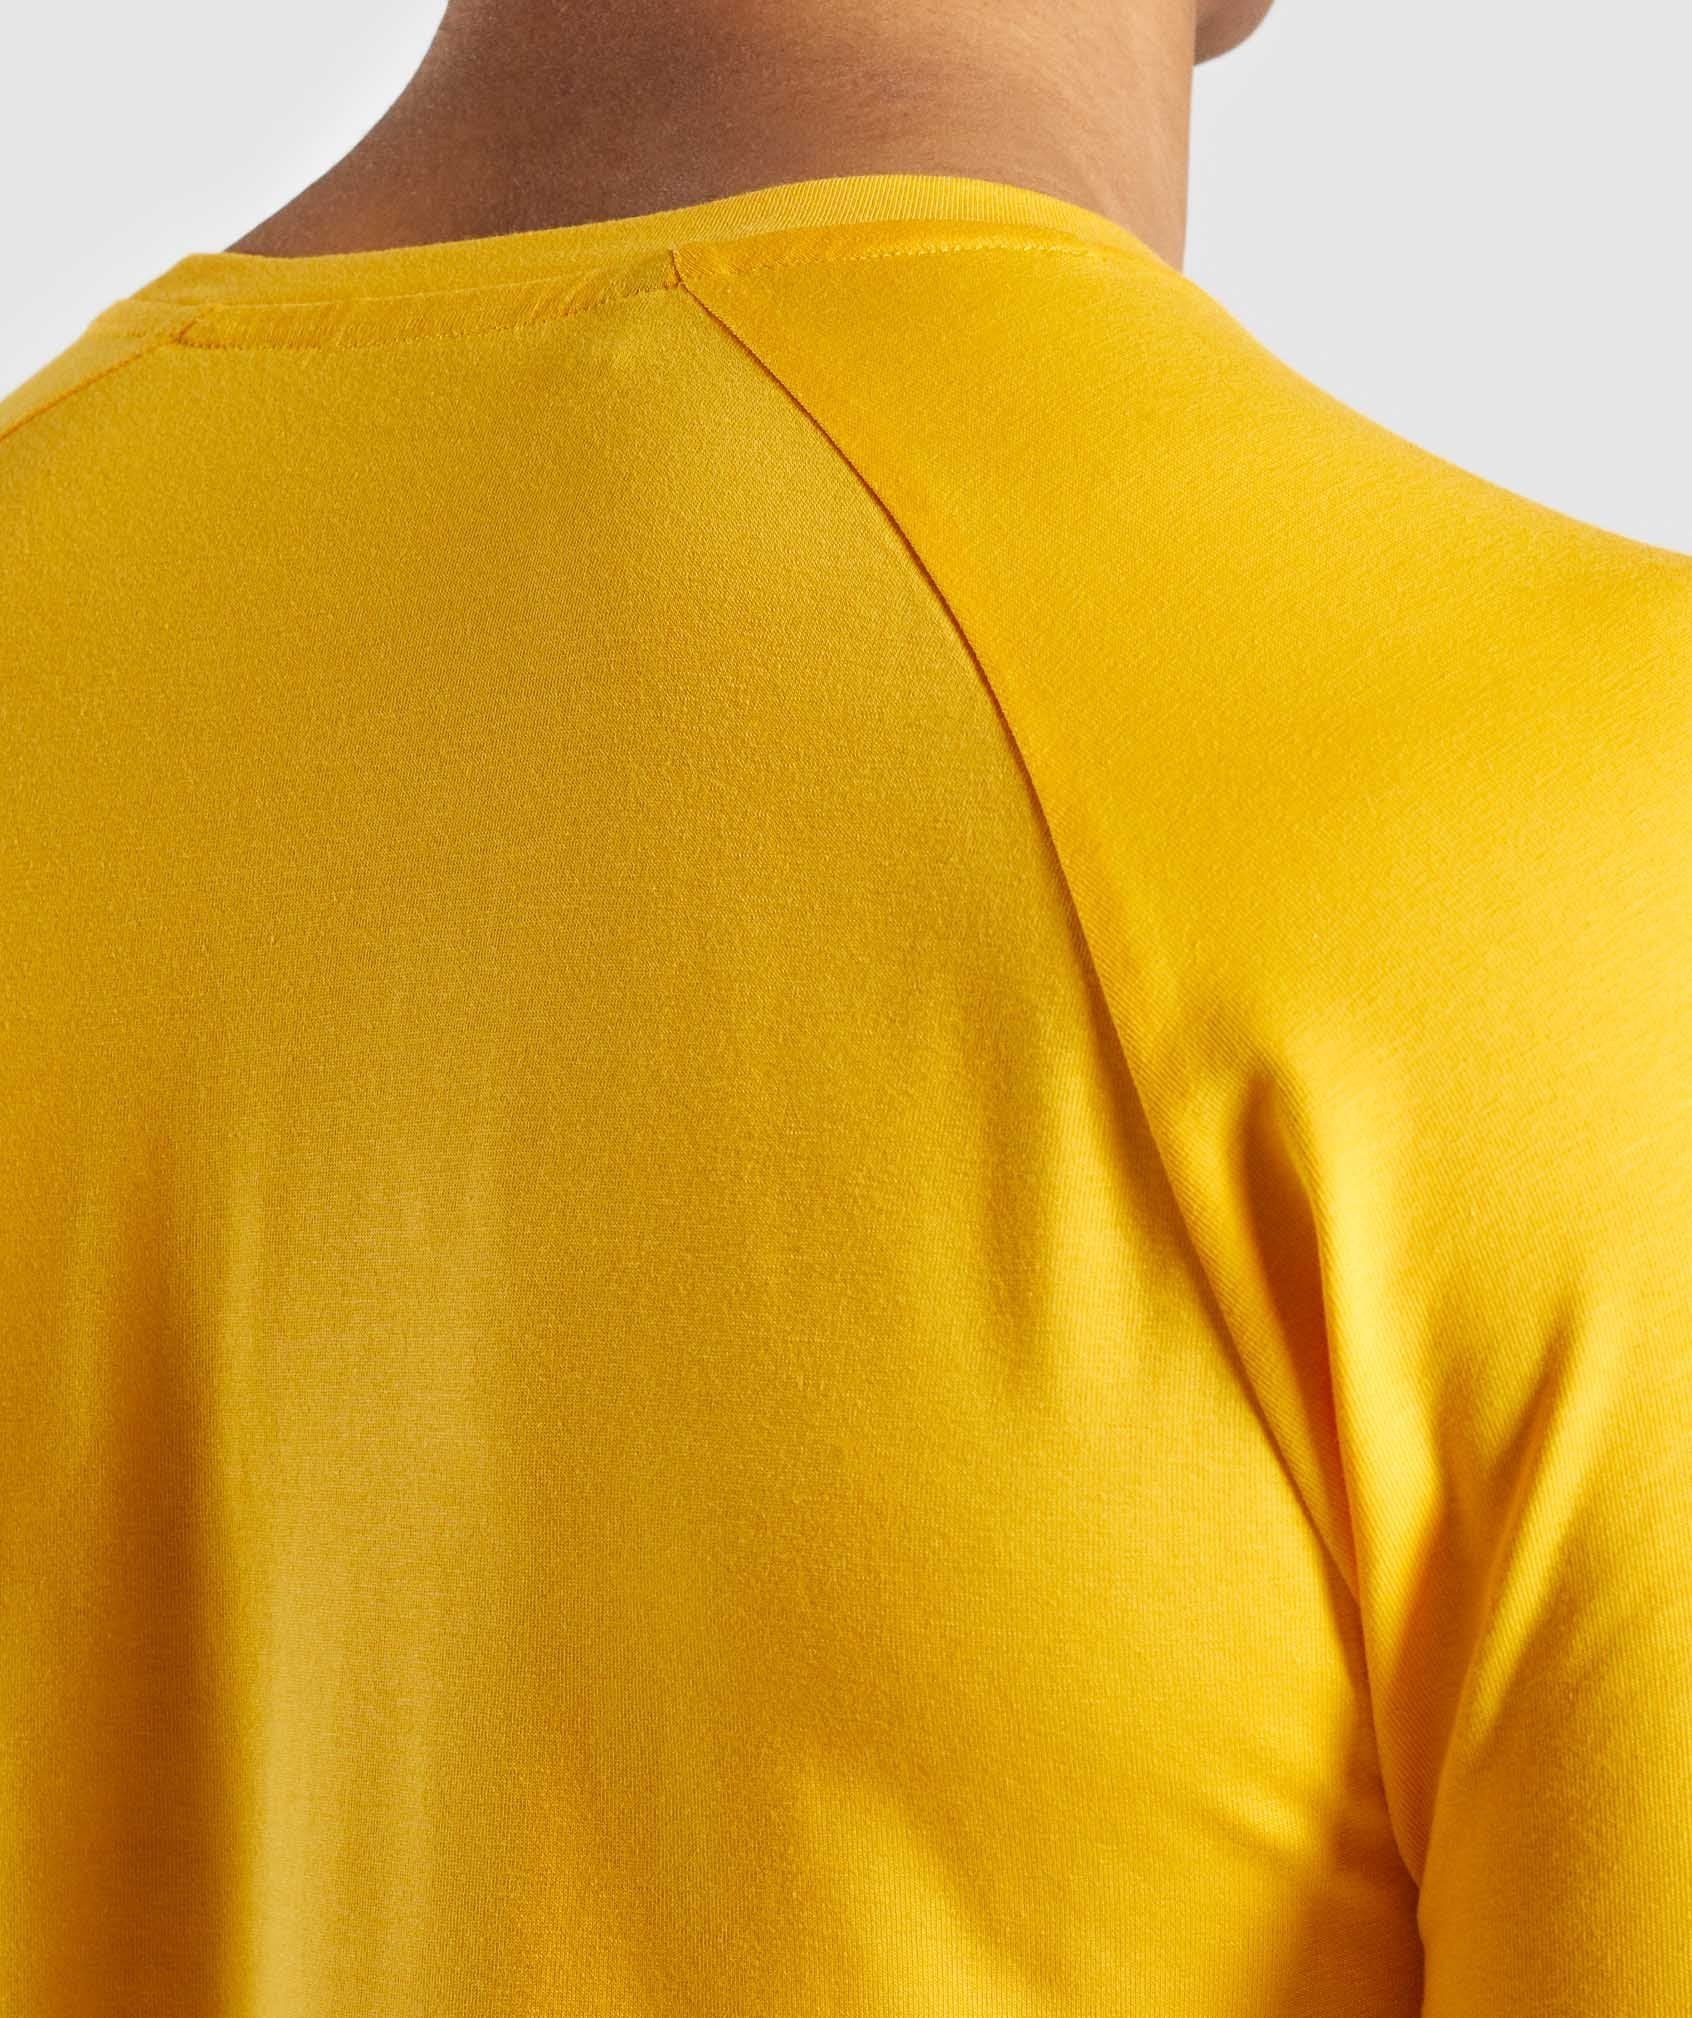 Apollo T-Shirt in Yellow - view 6